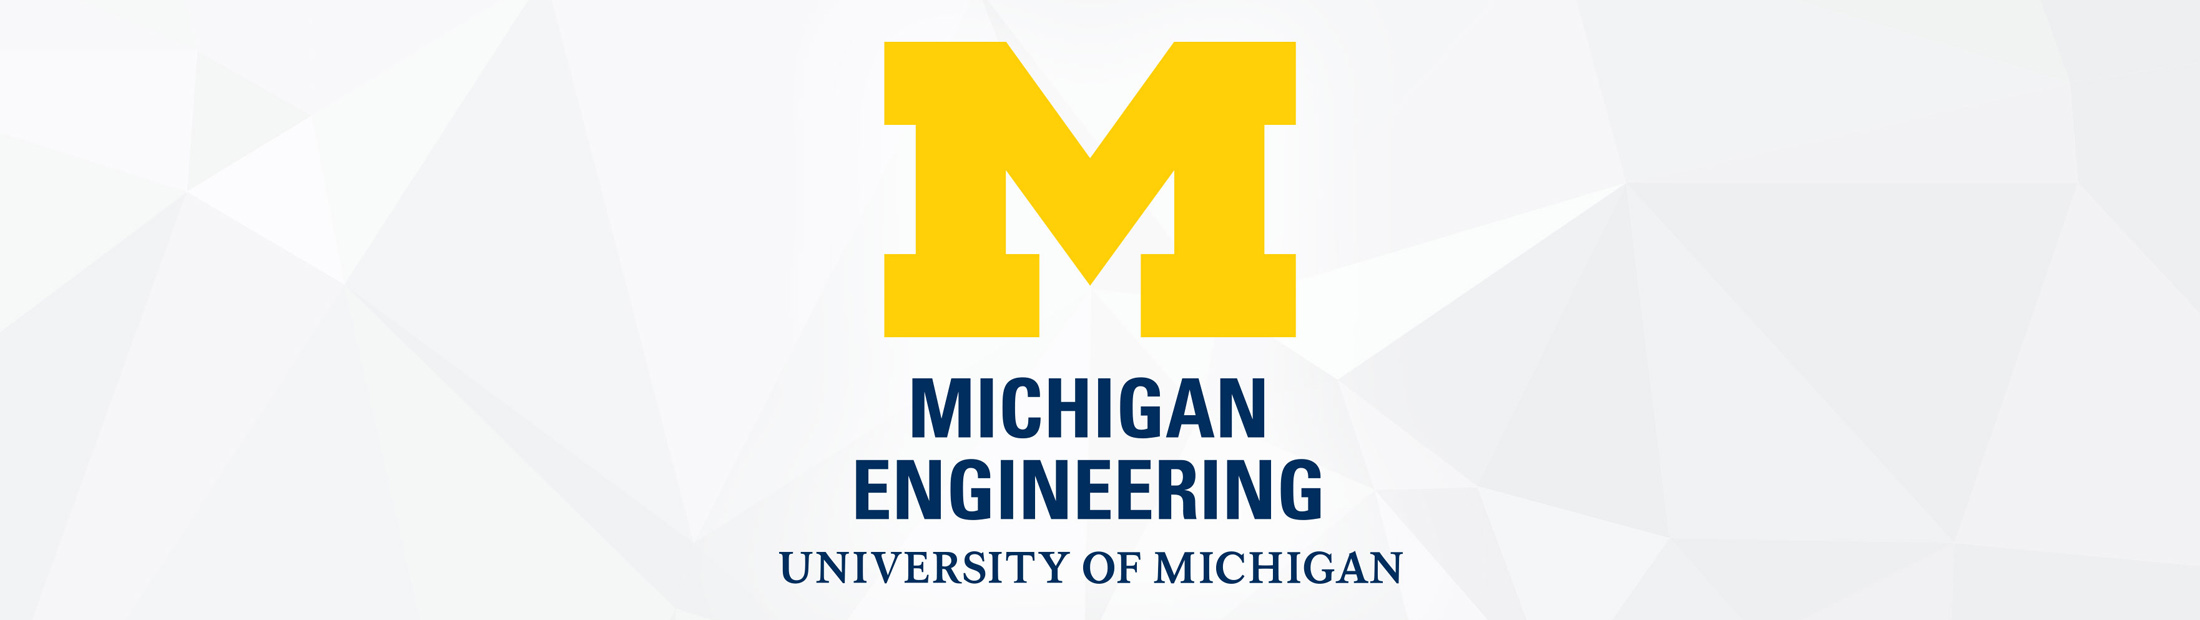 university of michigan engineering essay